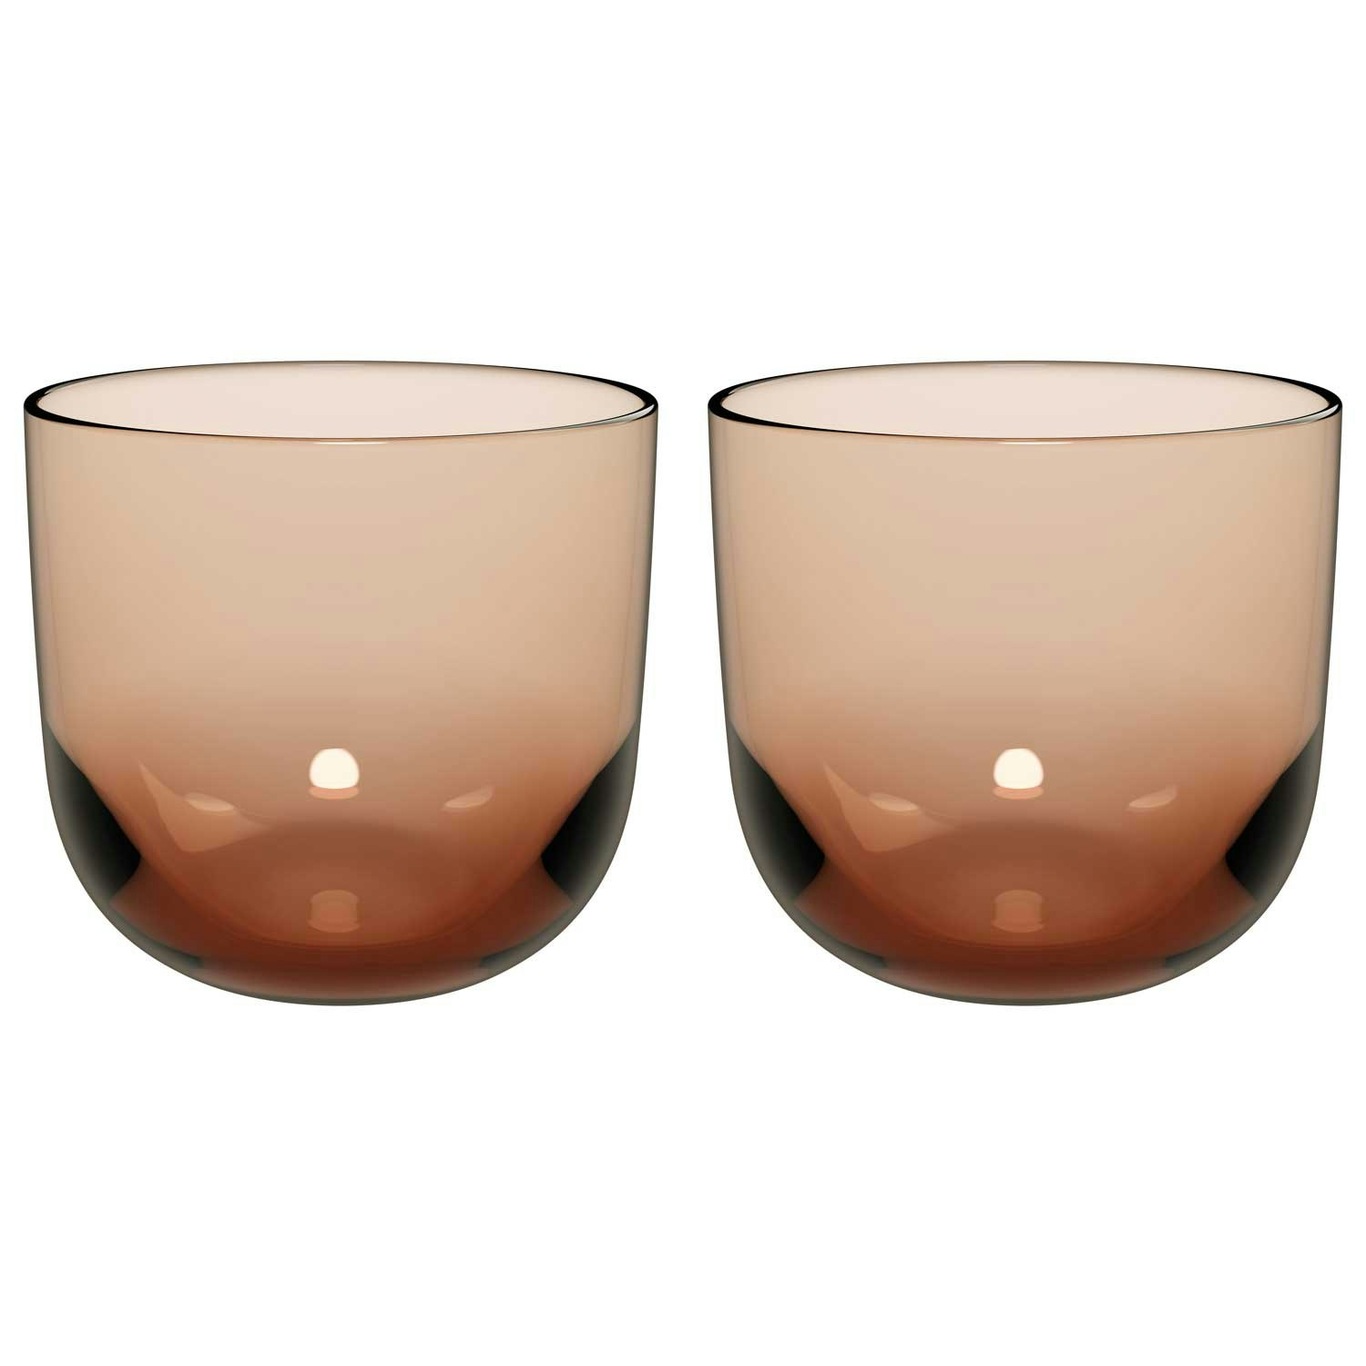 https://royaldesign.com/image/2/villeroy-boch-like-water-glasses-2-pack-10?w=800&quality=80